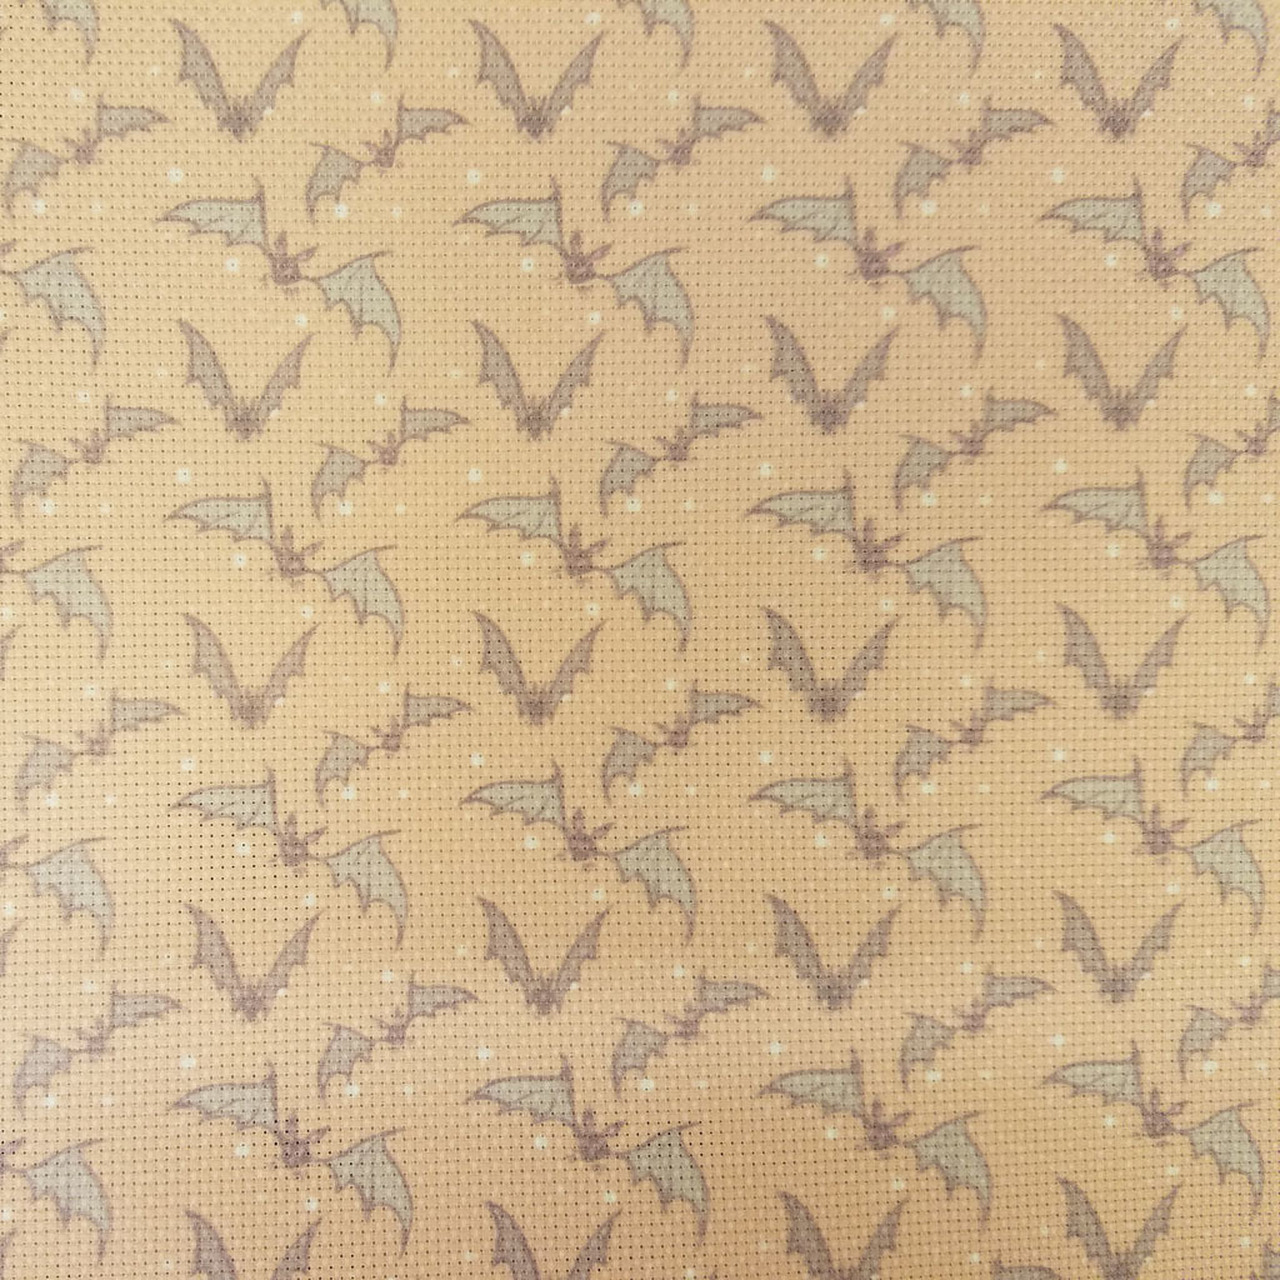 Bats On Orange Patterned Cross Stitch Fabric